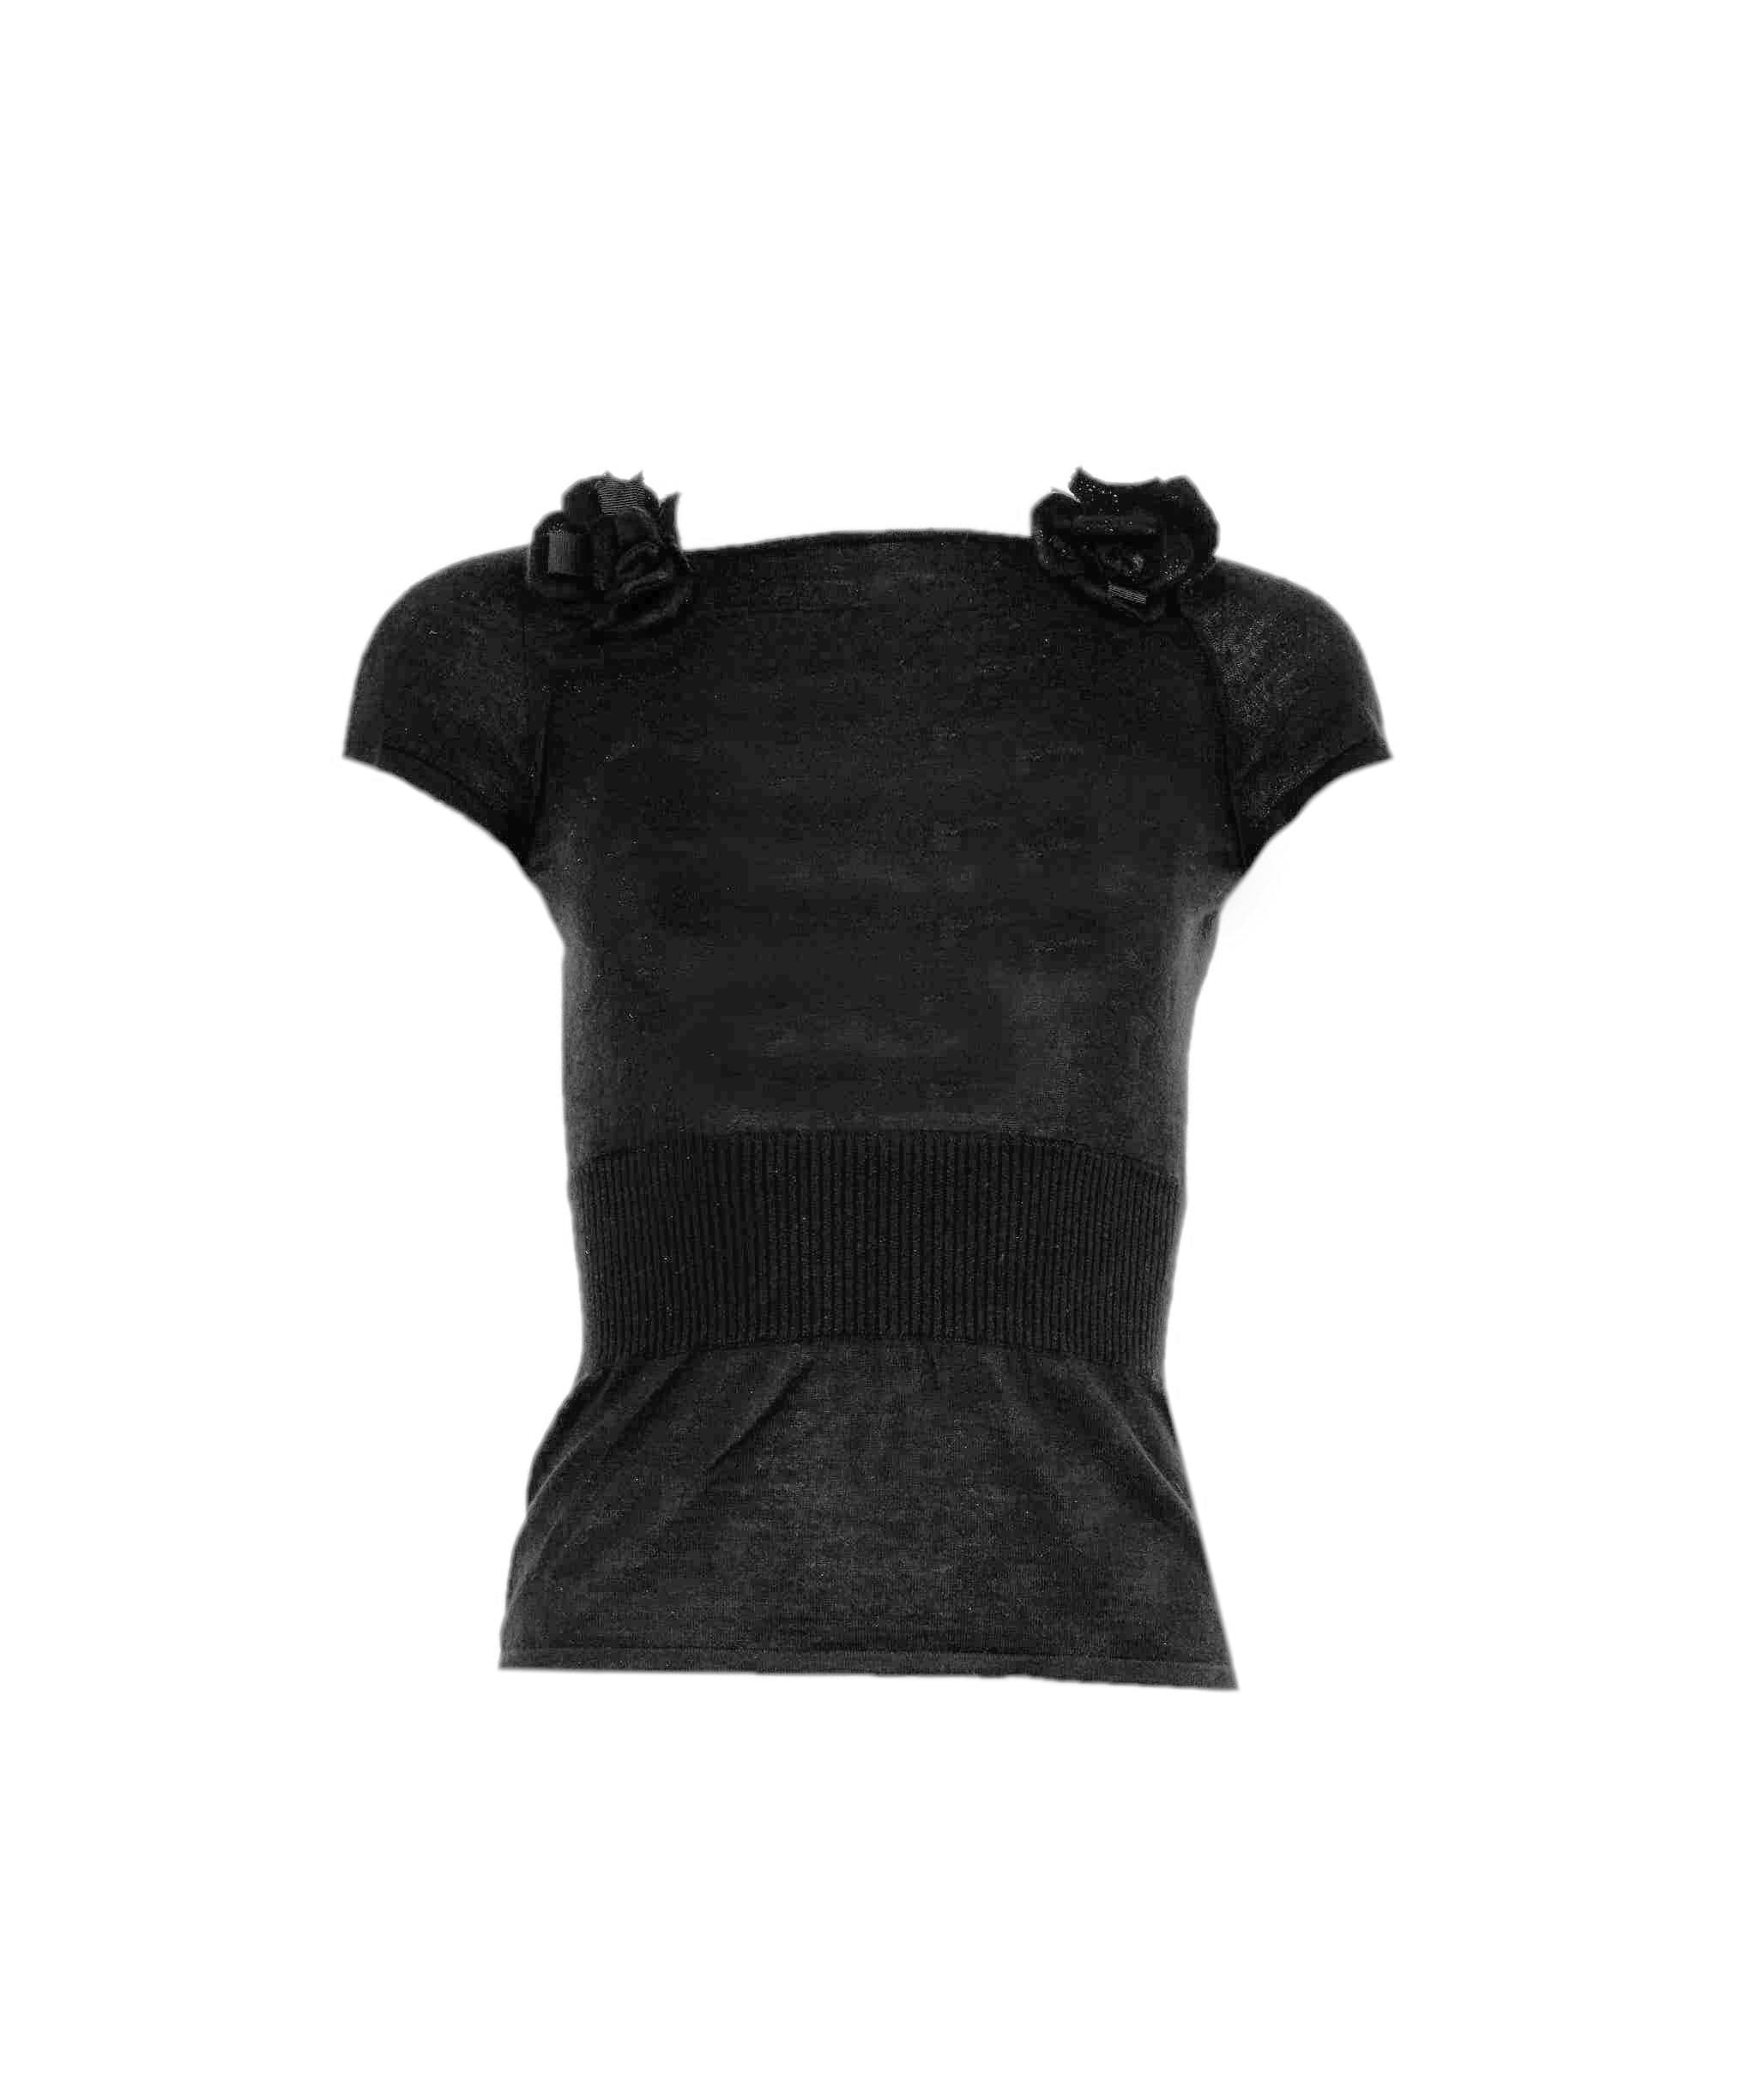 Chanel chanel black top AWL4513